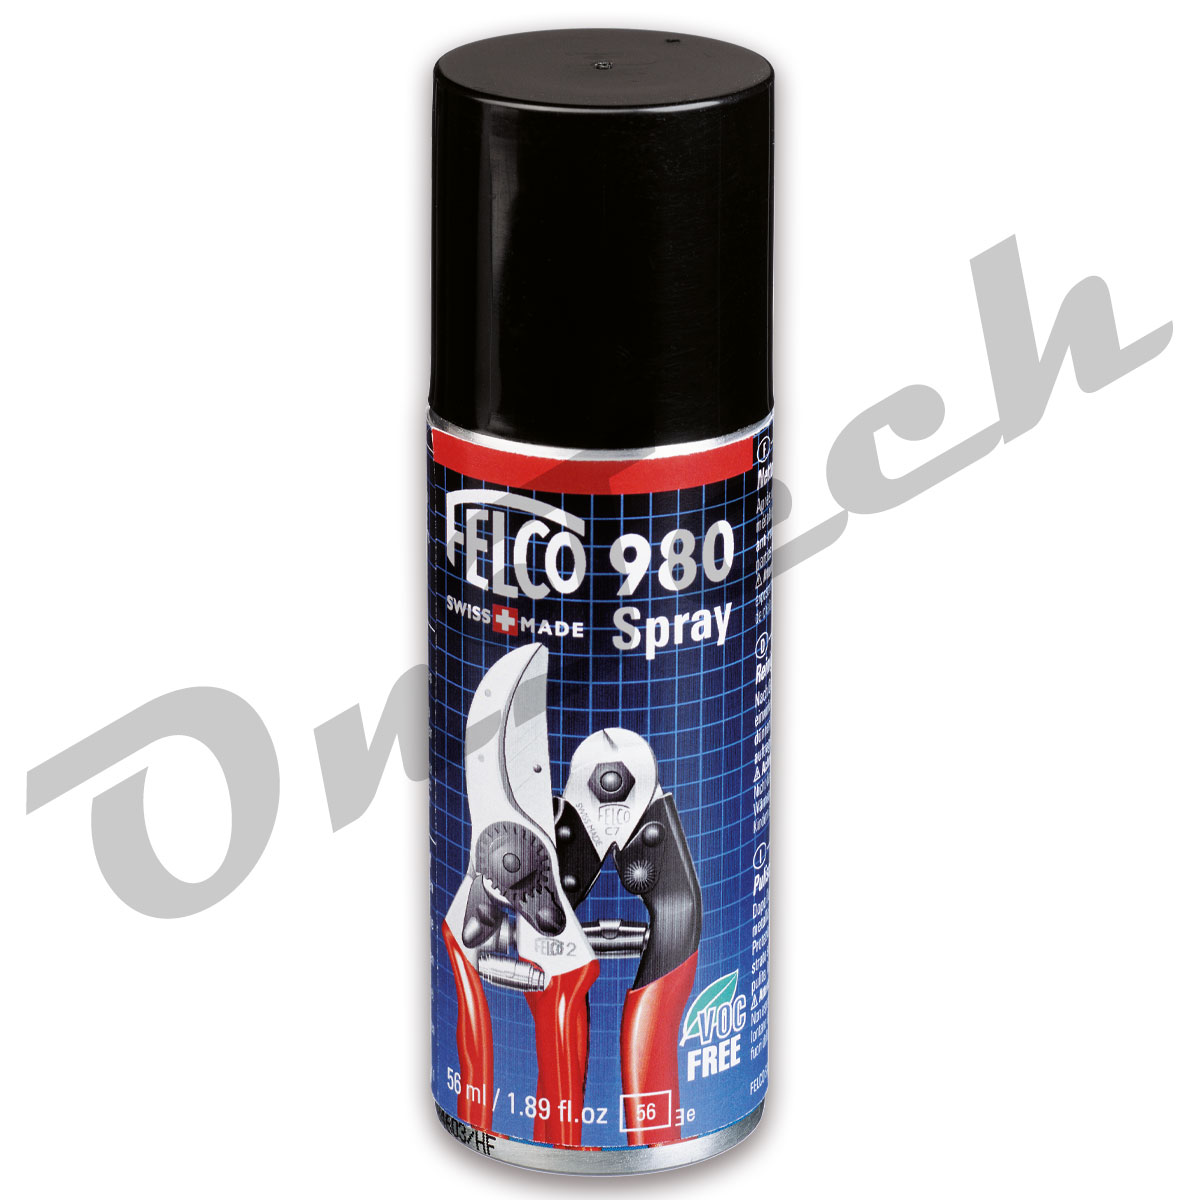 Felco 980 - Spray